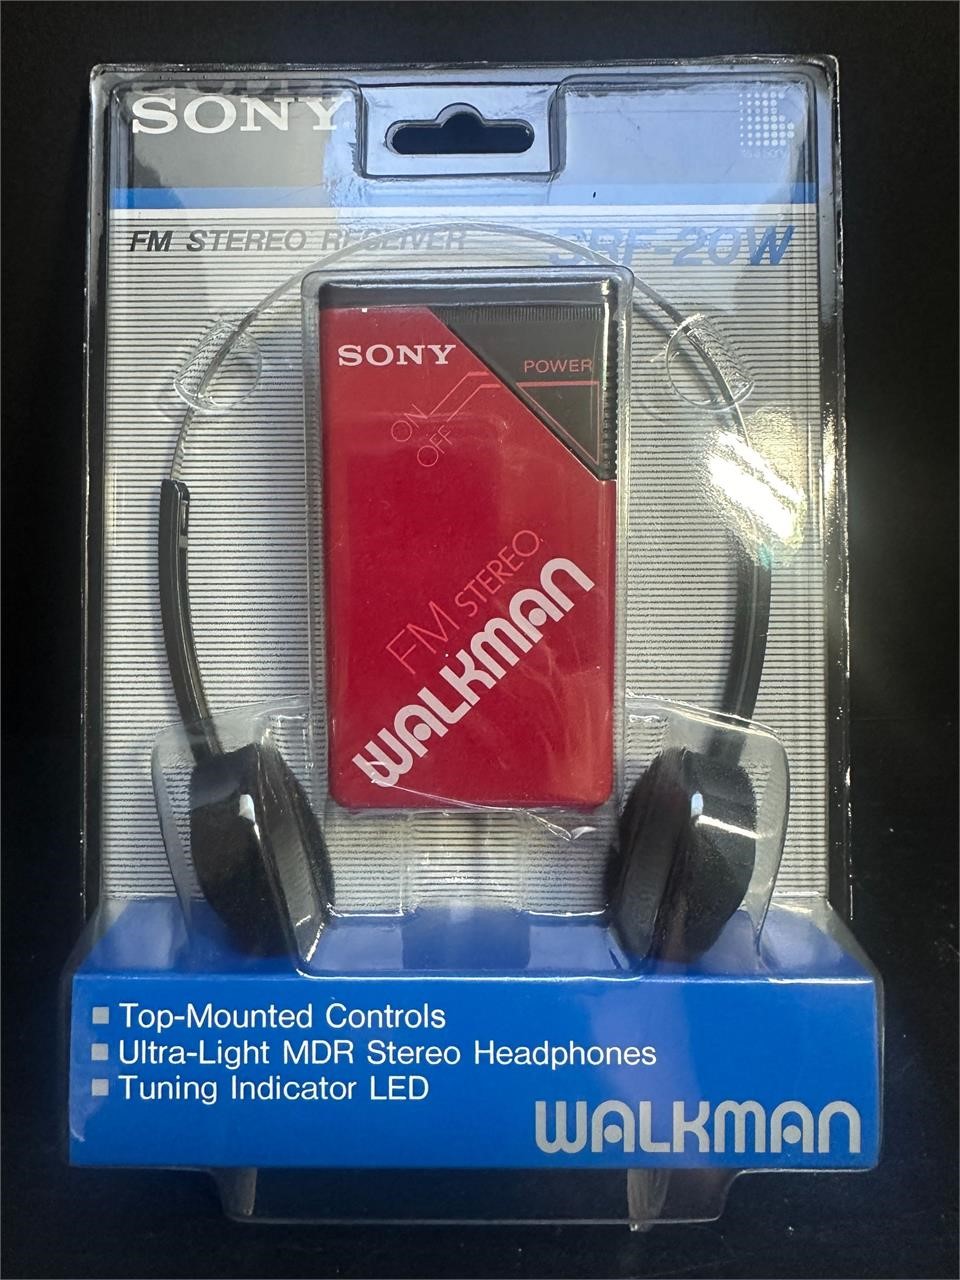 Unopened 1980's Sony Walkman FM Stereo